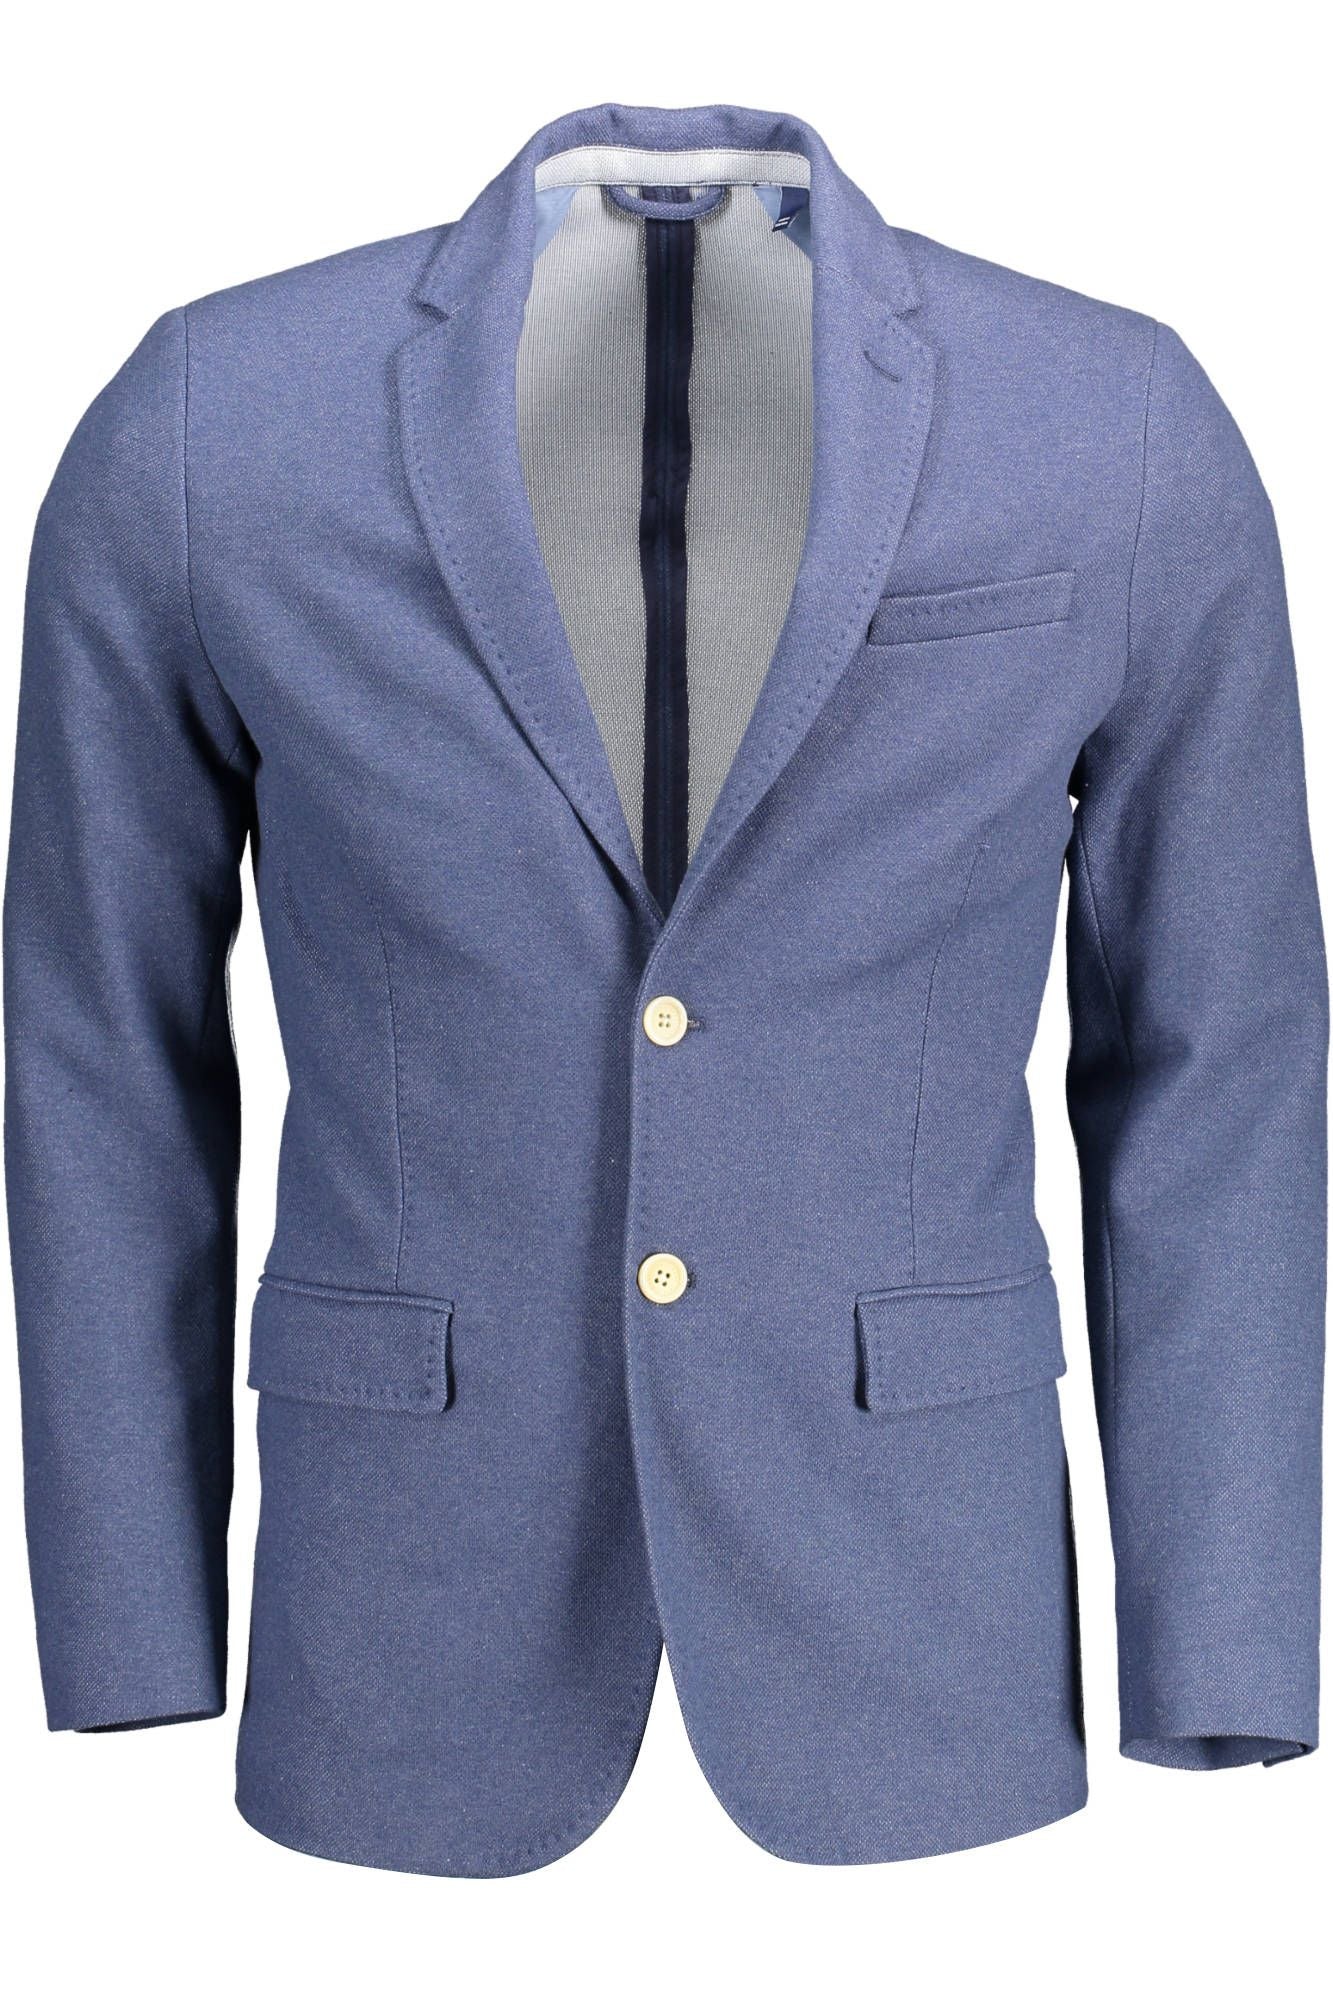 Chic Slim-Fit Blue Jacket with Elegant Detailing